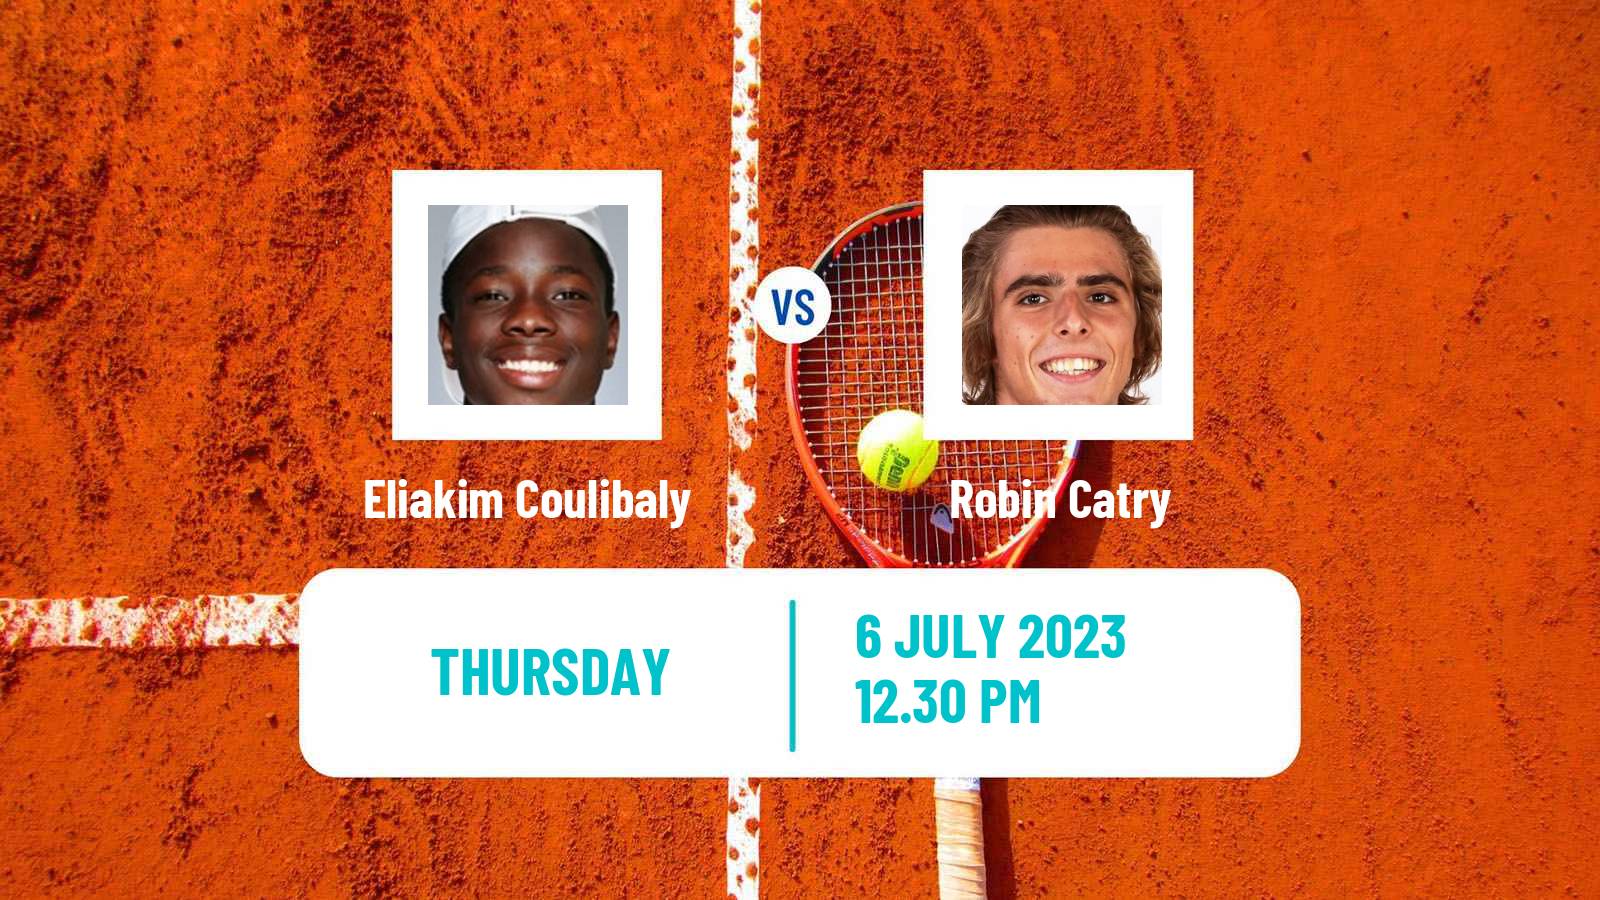 Tennis ITF M25 H Ajaccio Men Eliakim Coulibaly - Robin Catry